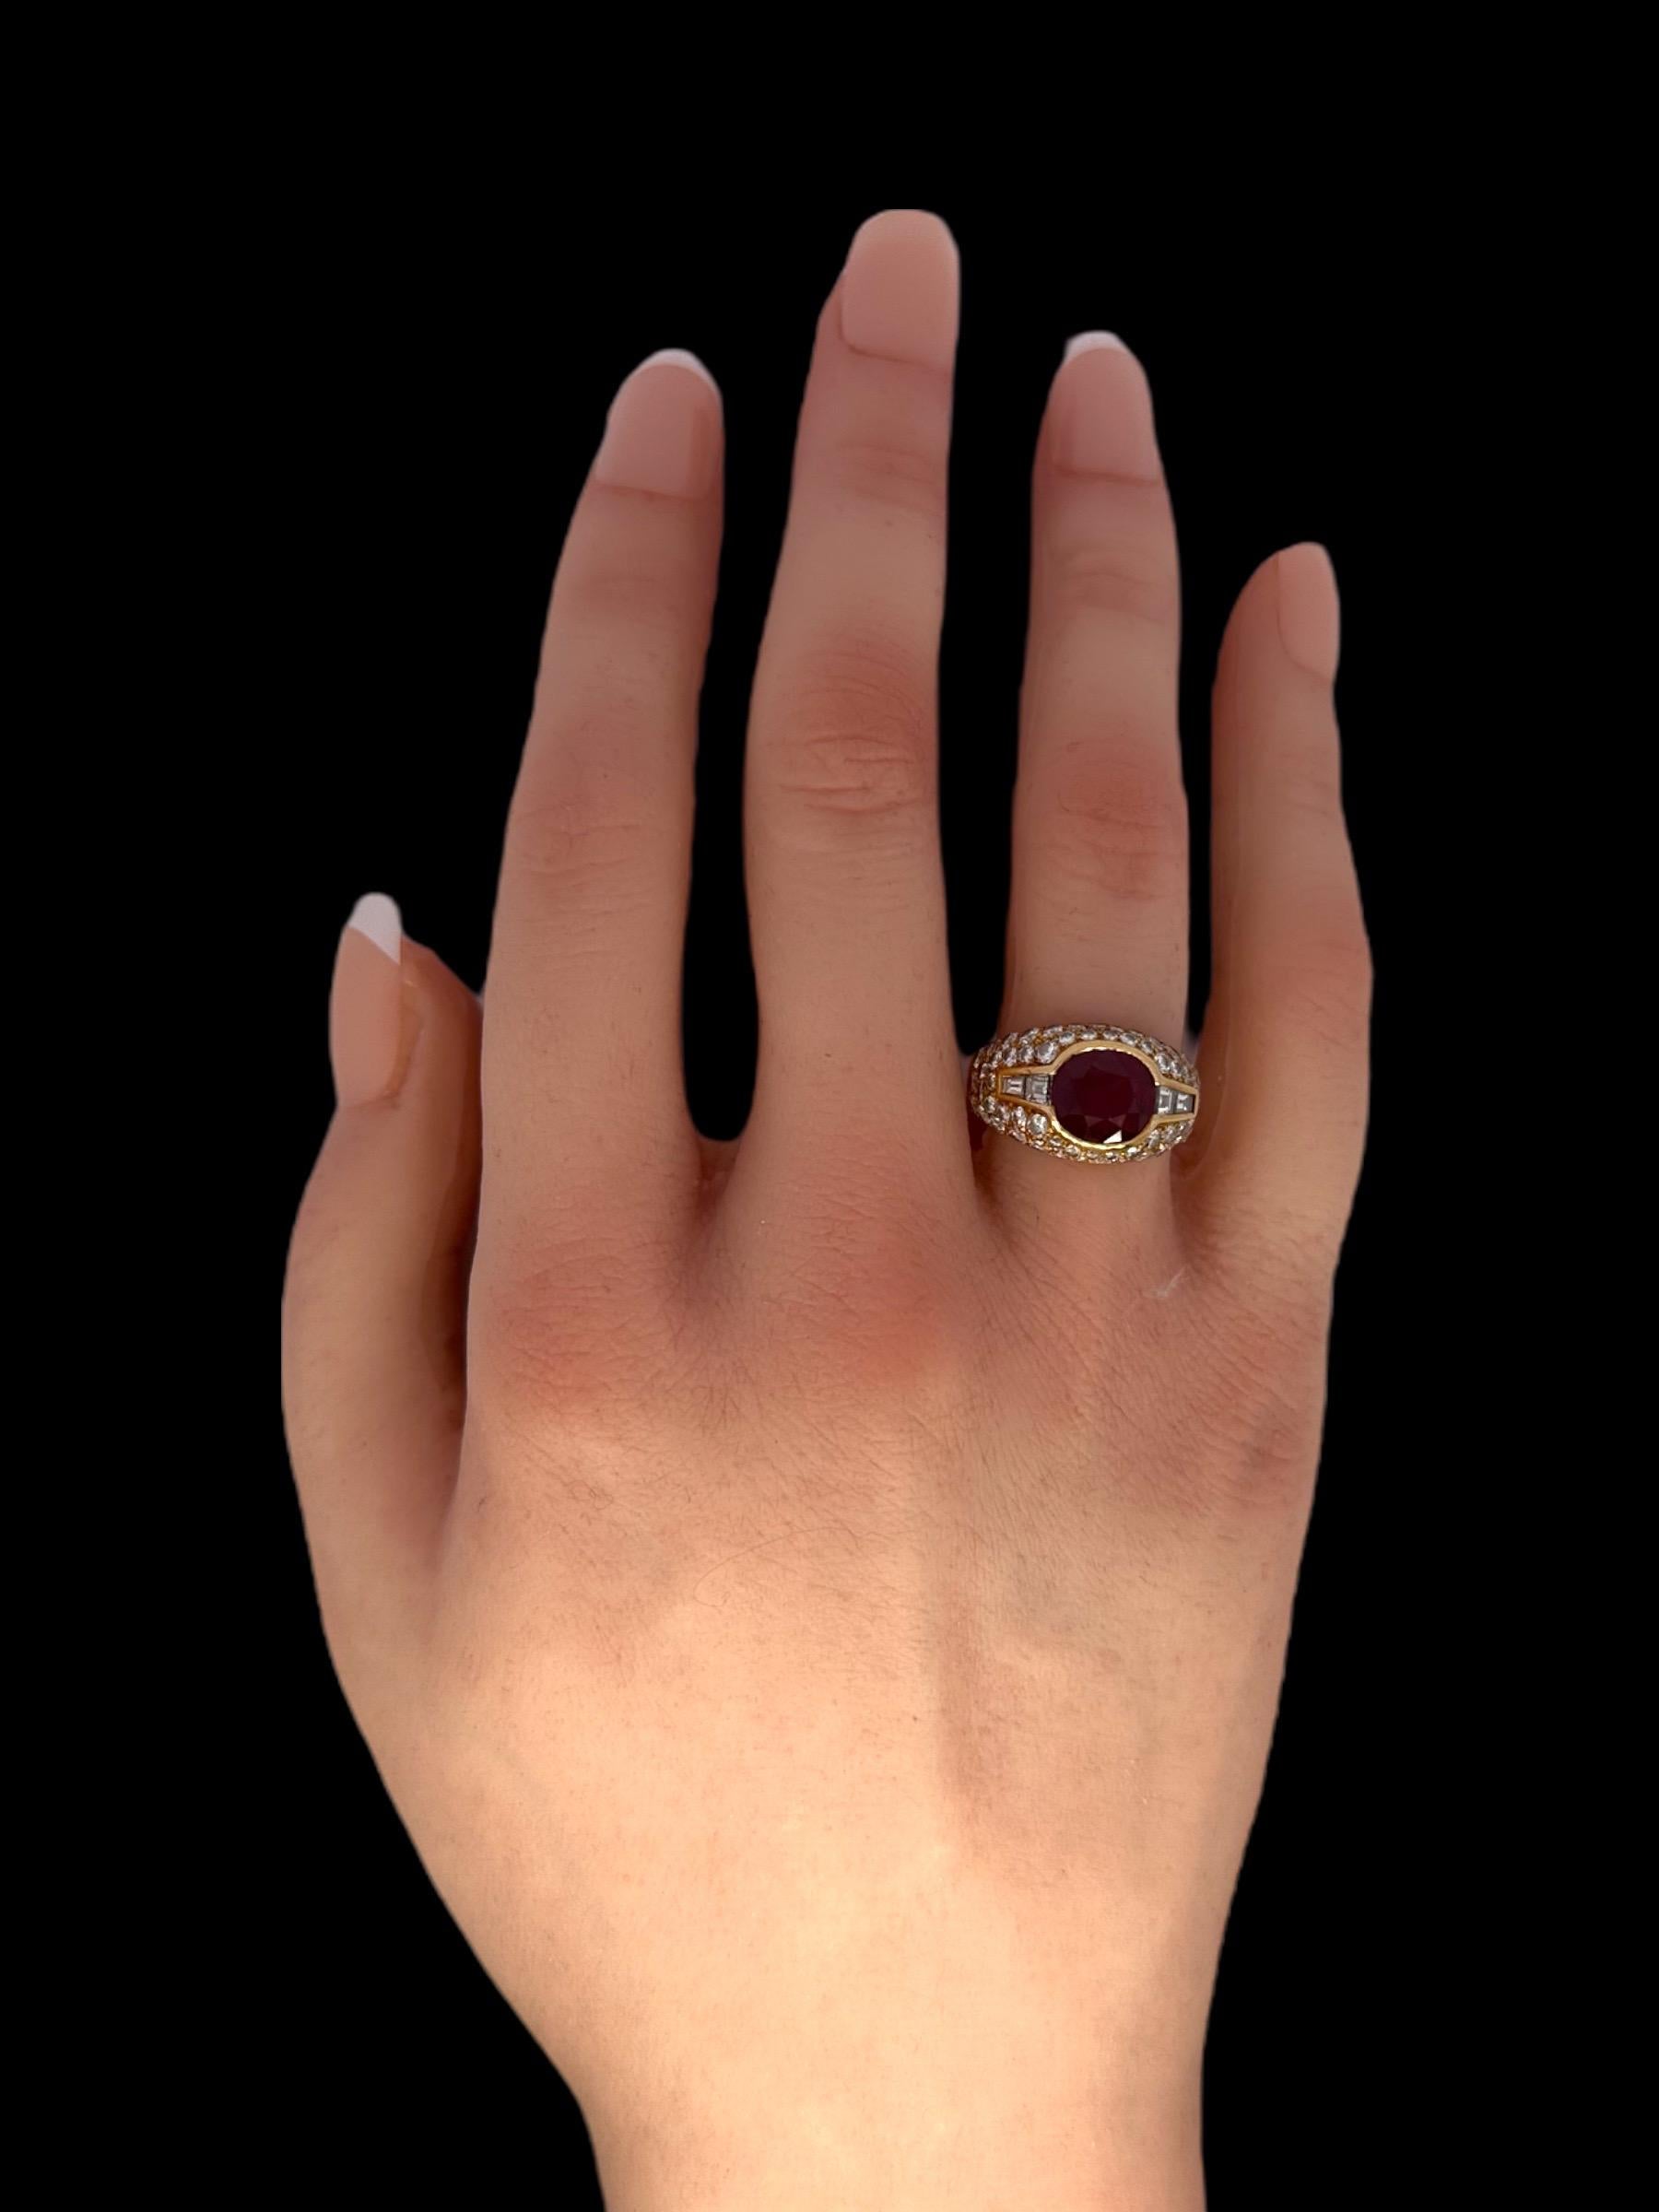 Bvlgari Trombino 18kt Yellow Gold Ring 2.09ct Ruby & Diamonds With GRS Cert For Sale 5